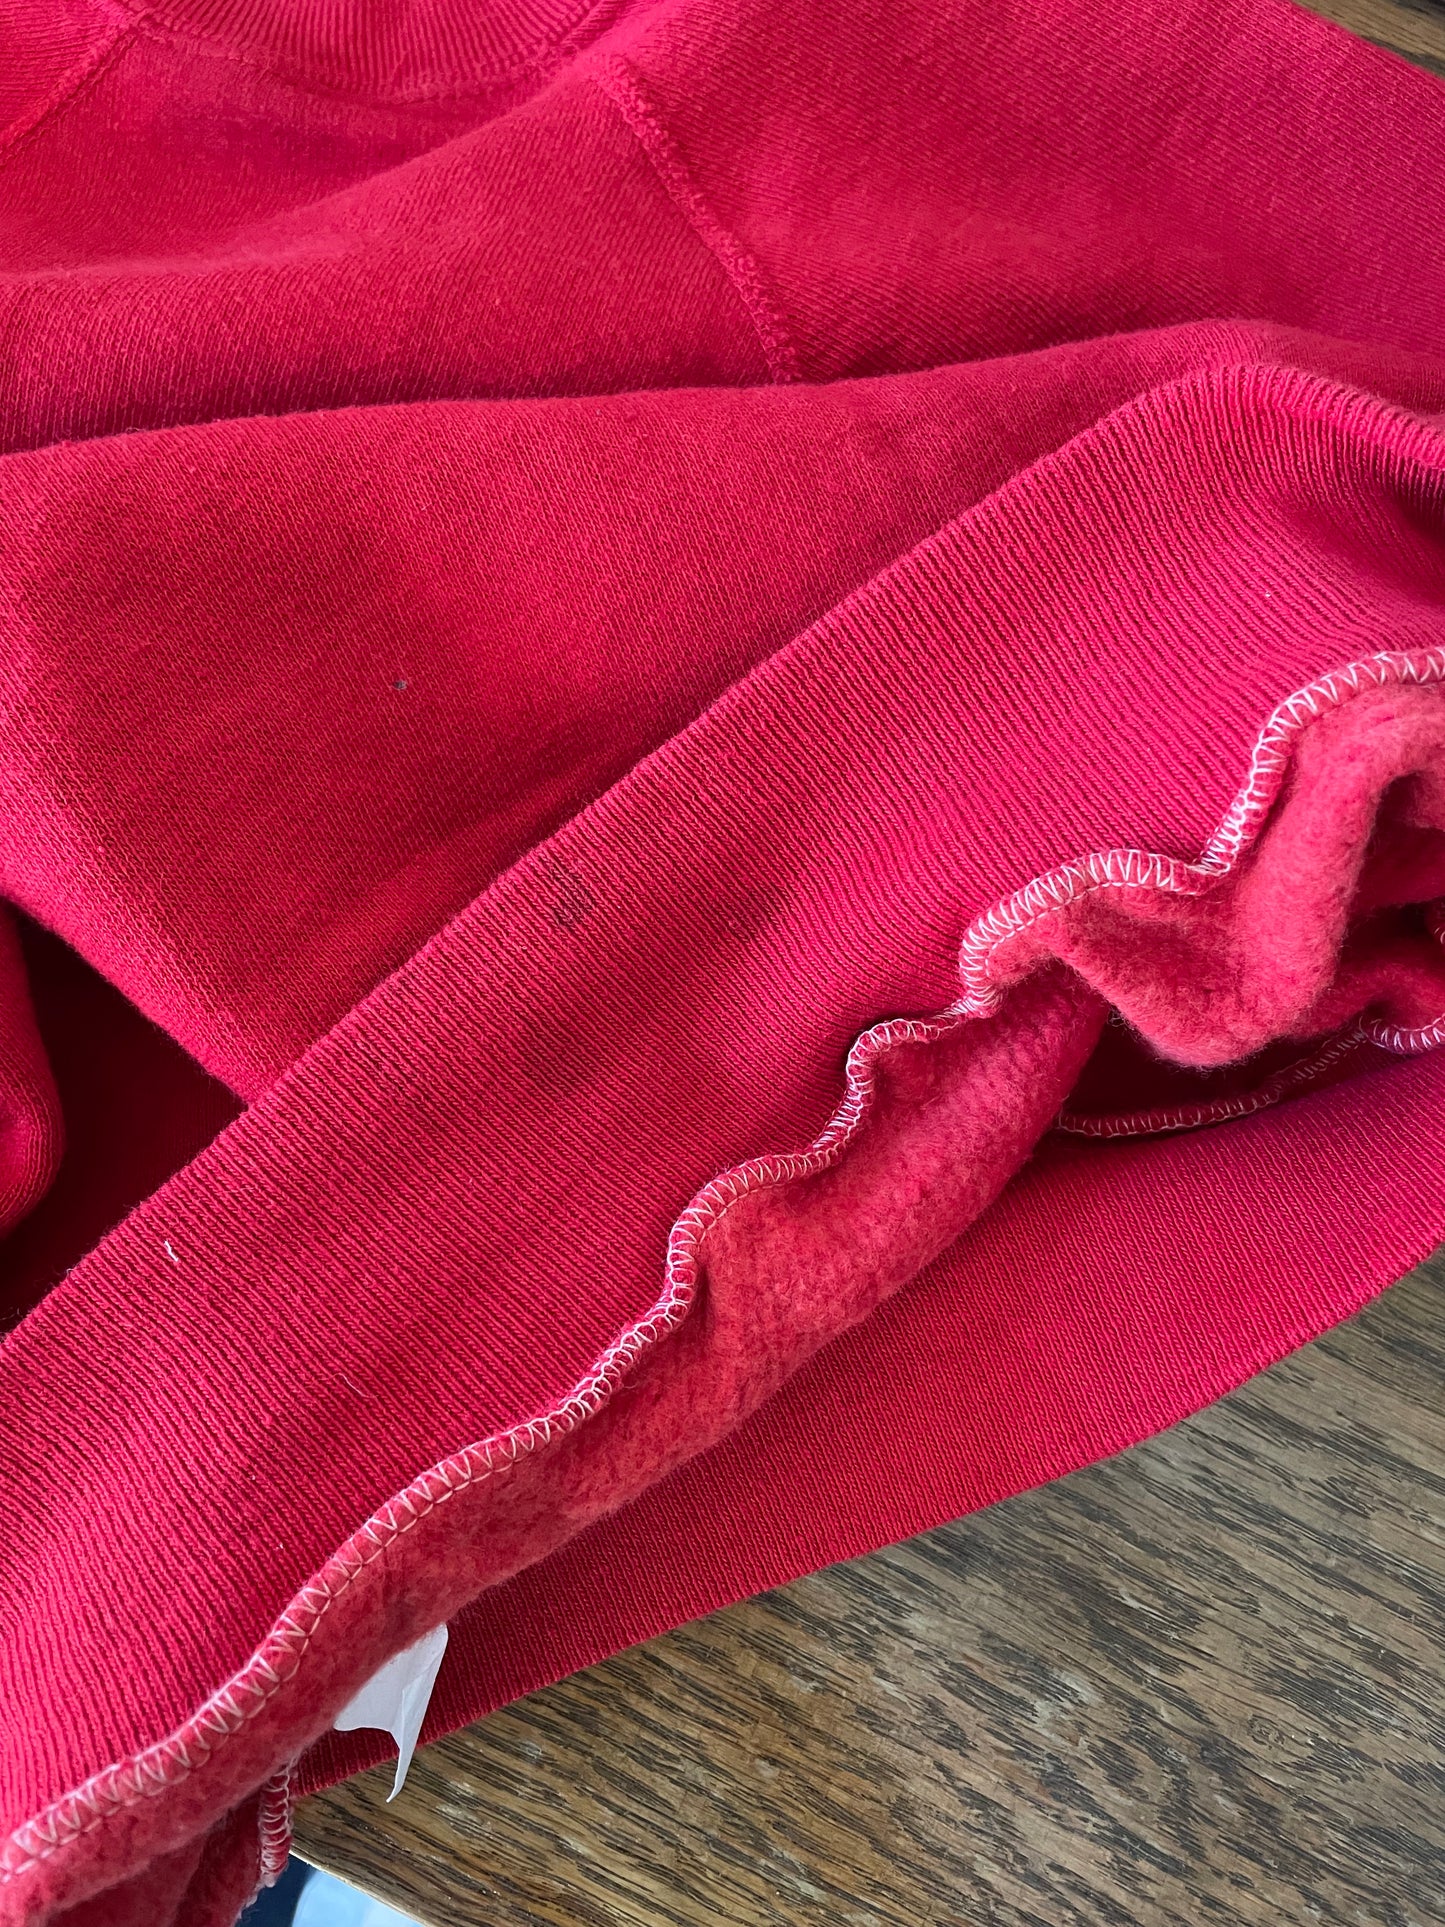 70s Blank Red Short Sleeve Sweatshirt